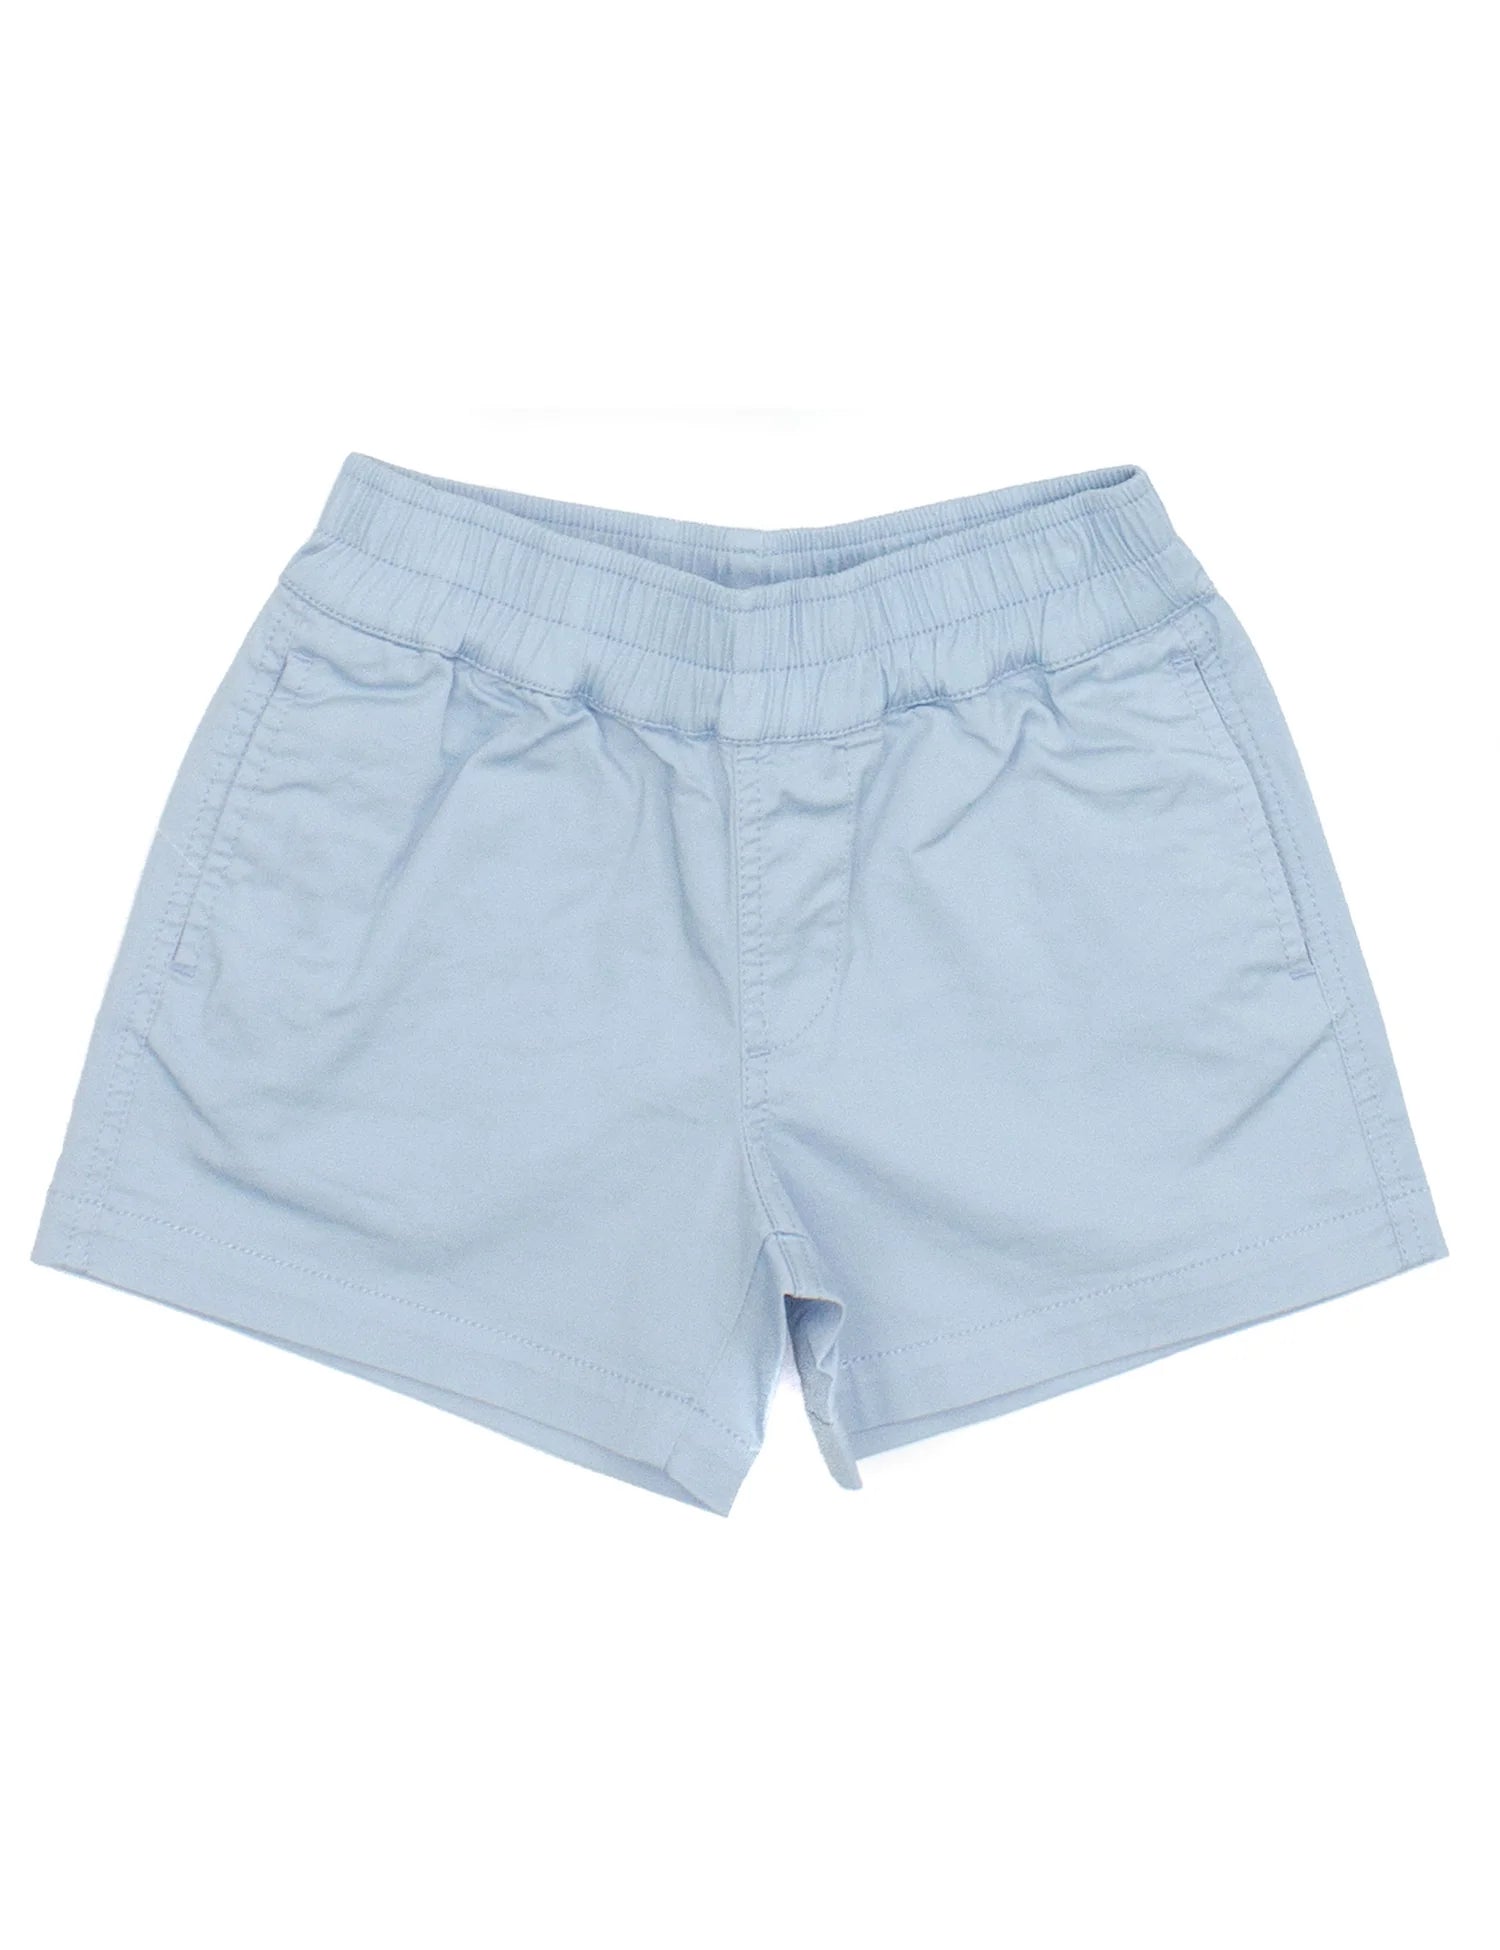 Properly Tied Boys Sun Shorts - Light Blue